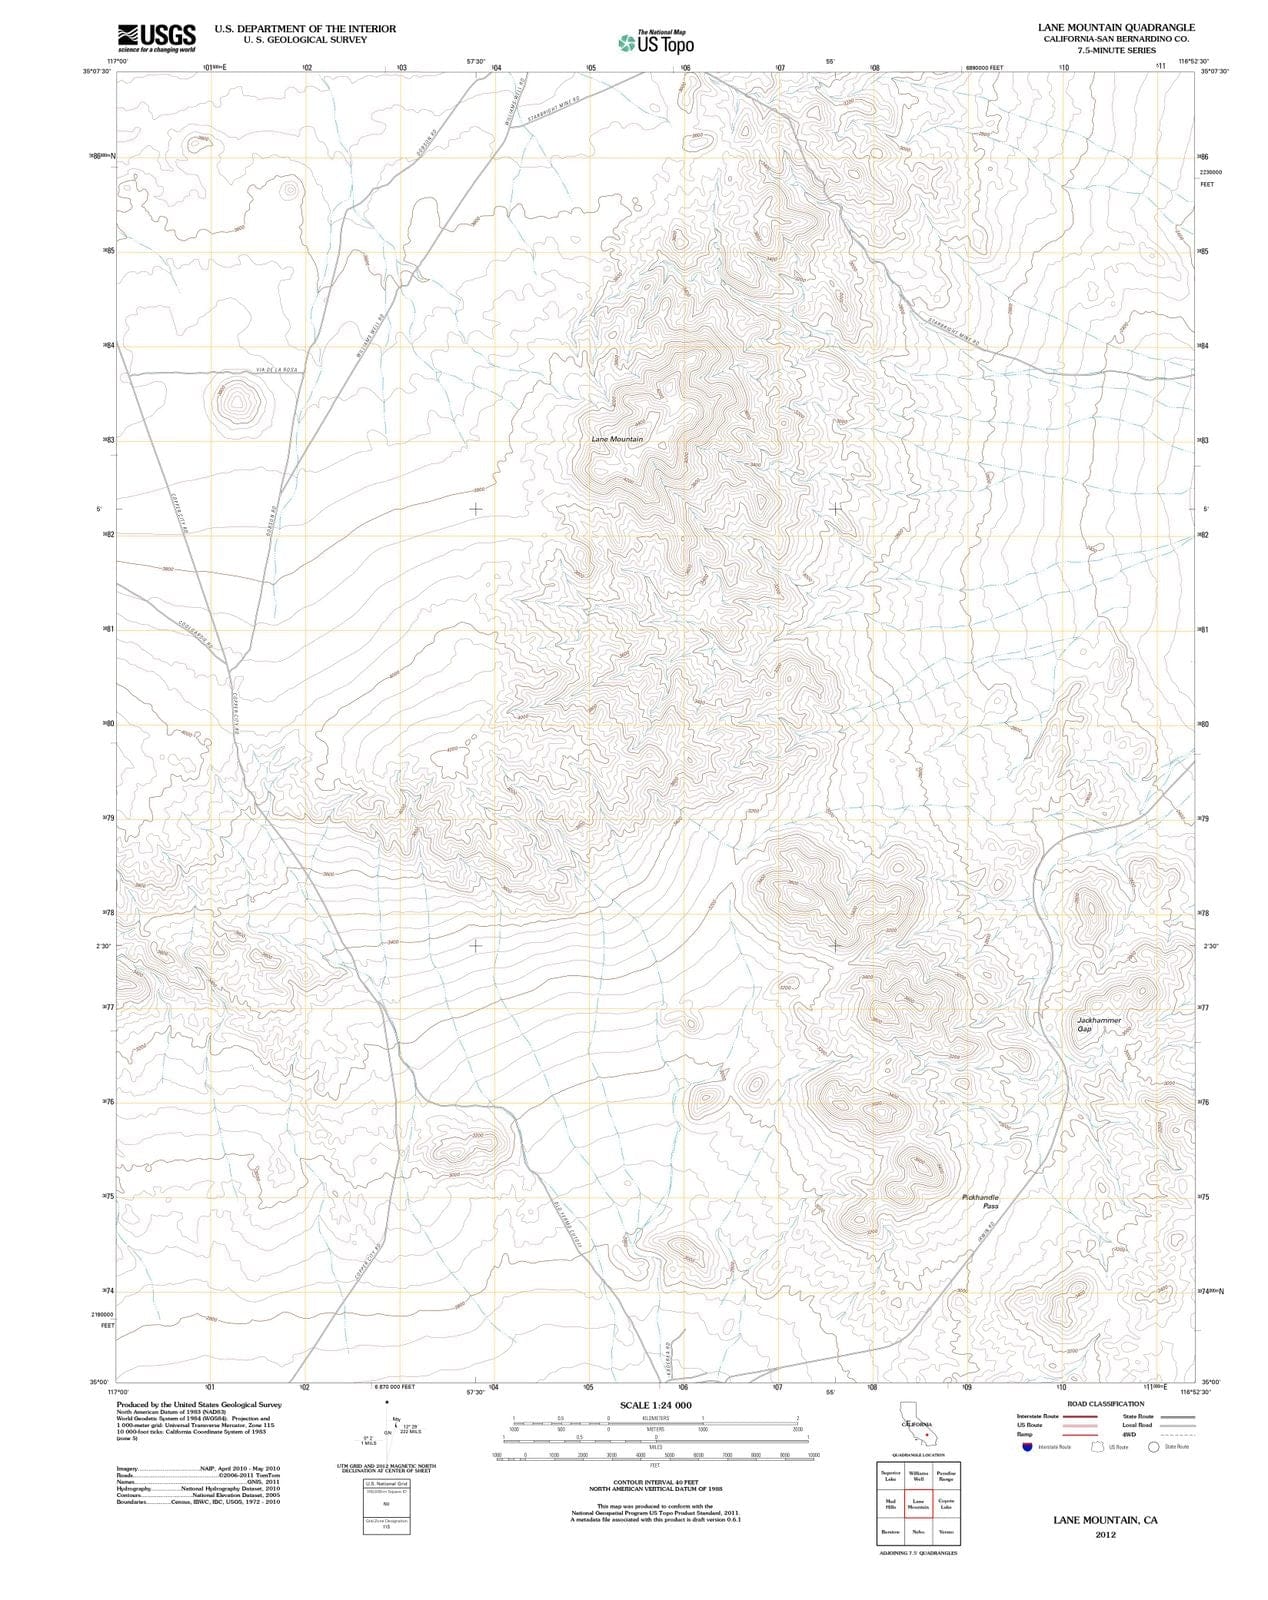 2012 Lane Mountain, CA - California - USGS Topographic Map